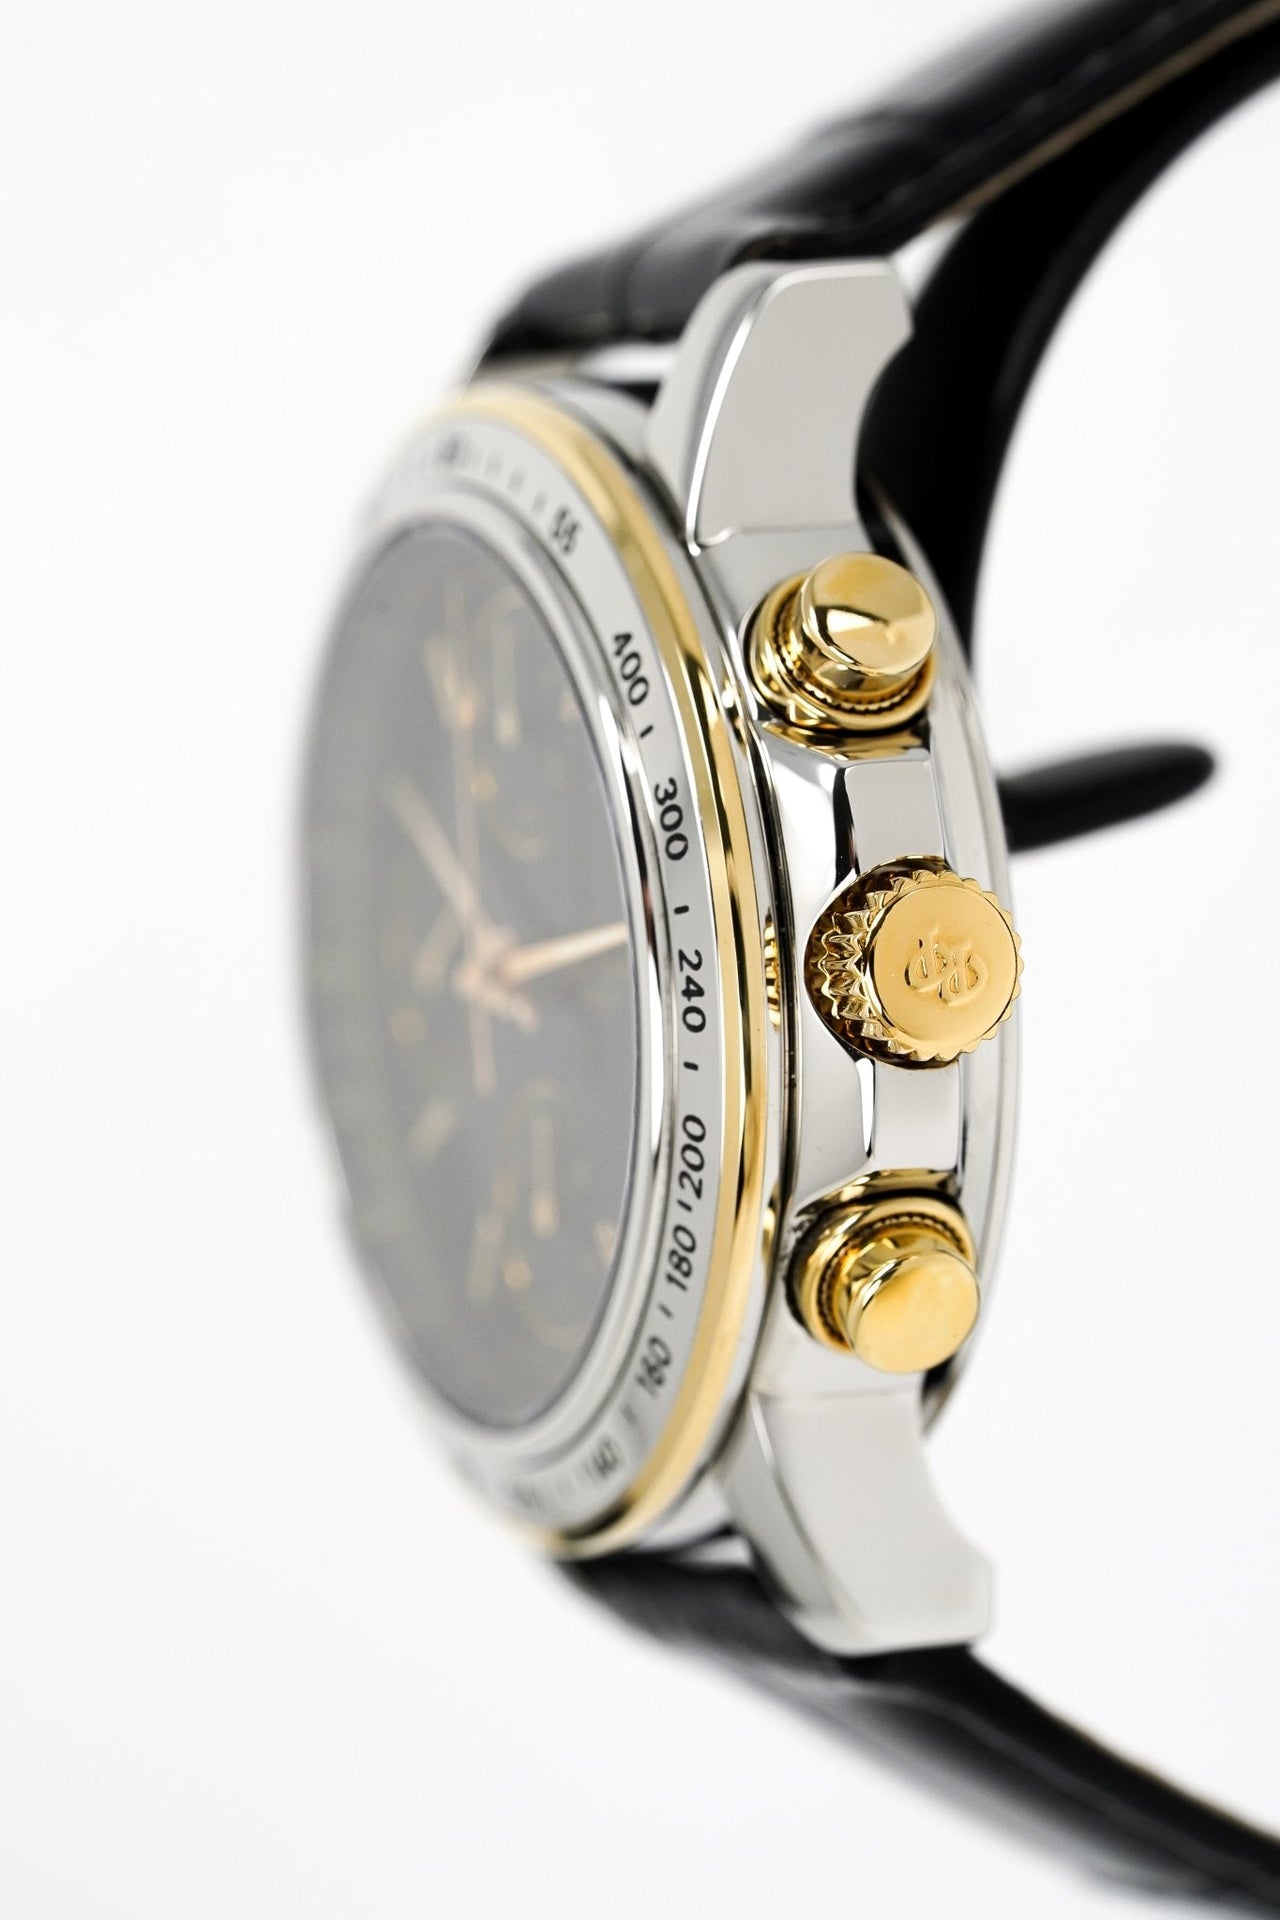 Paul Picot Men's Watch Chronosport Chronograph Black 18K Gold P7005322.332-A - Watches & Crystals